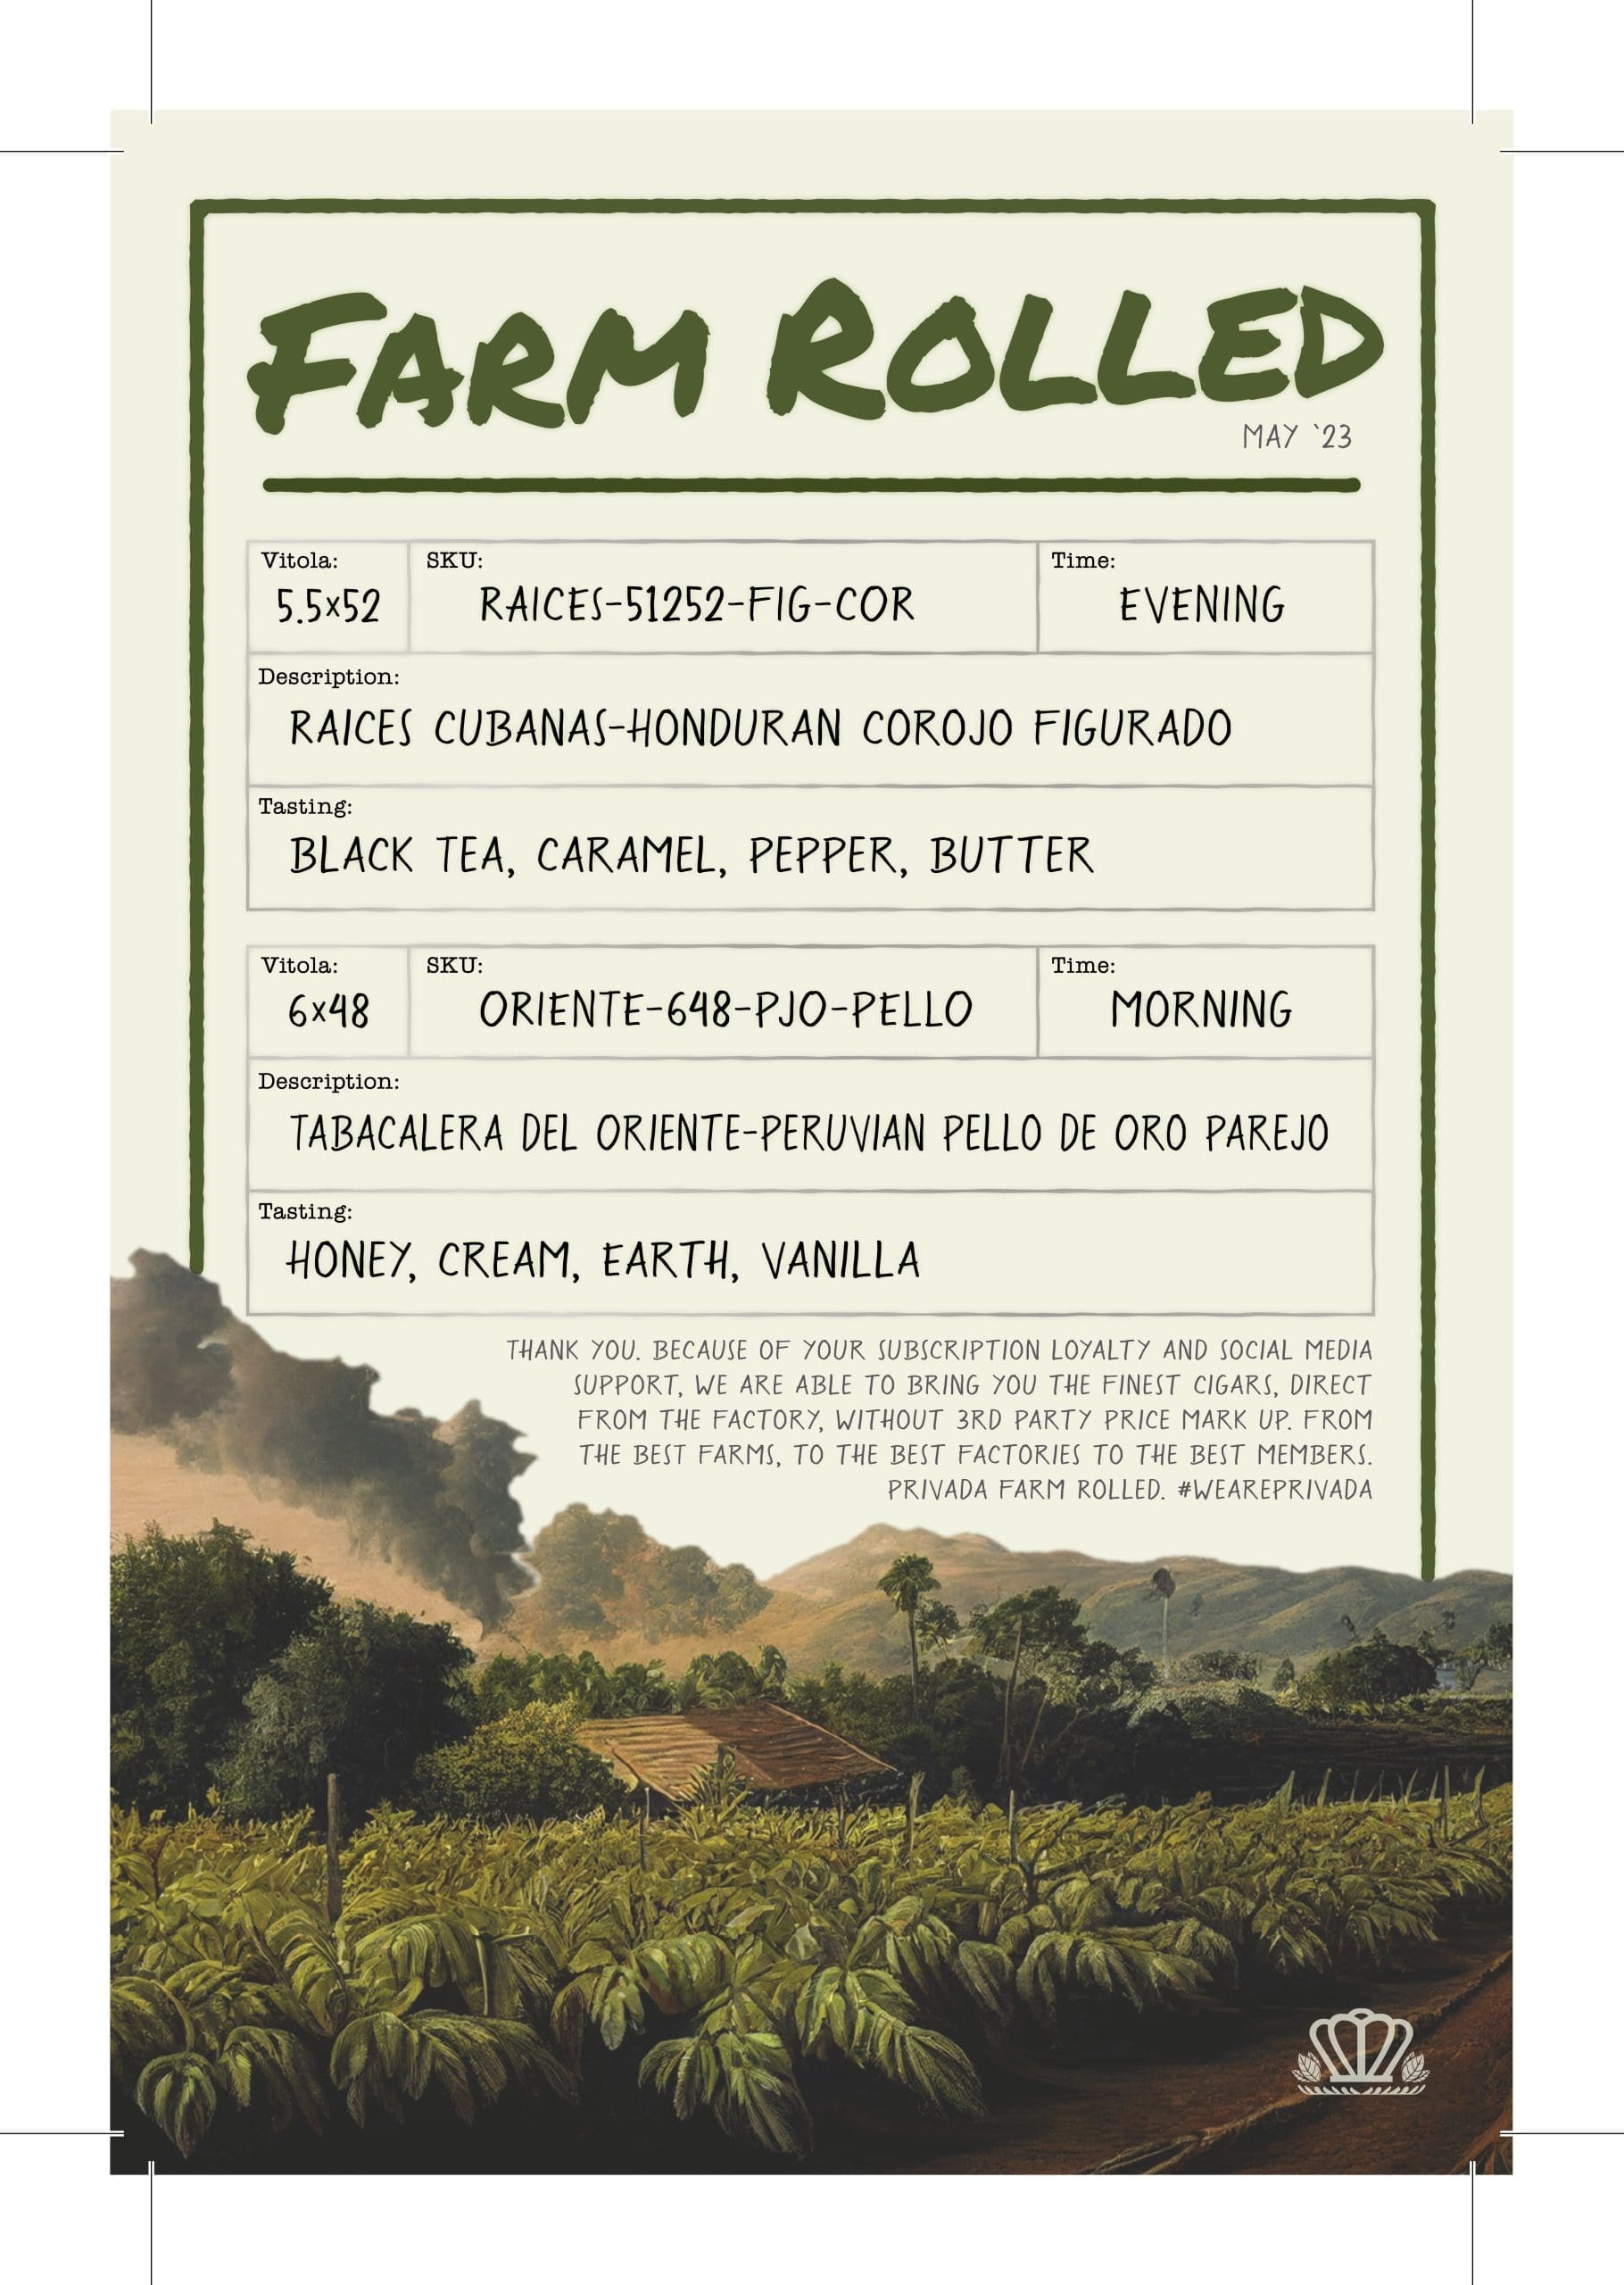 farmrolled tastecard